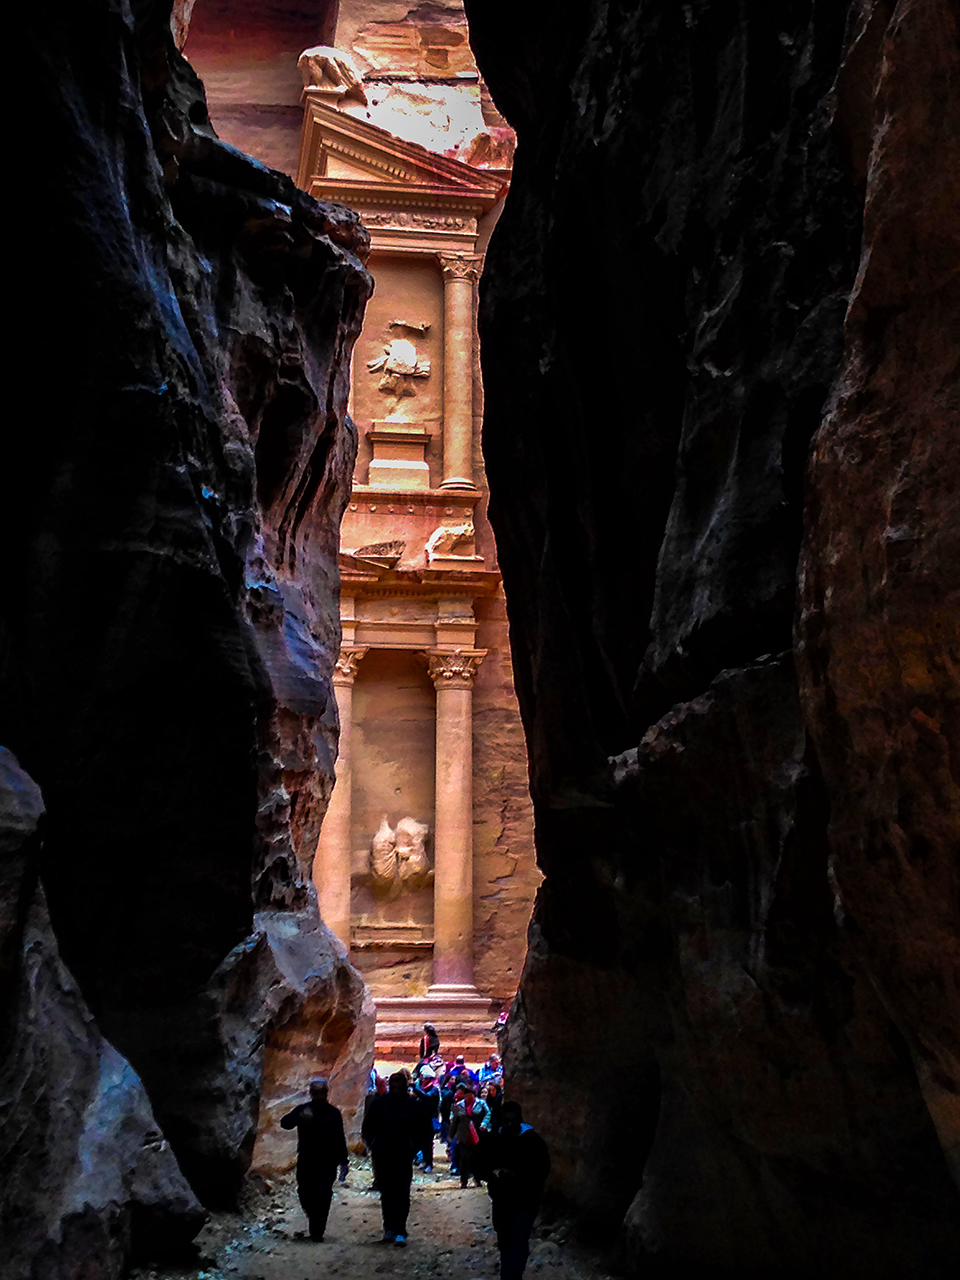 Seeing the incredible Treasury at the end of a long narrow canyon or siq in Petra Jordan